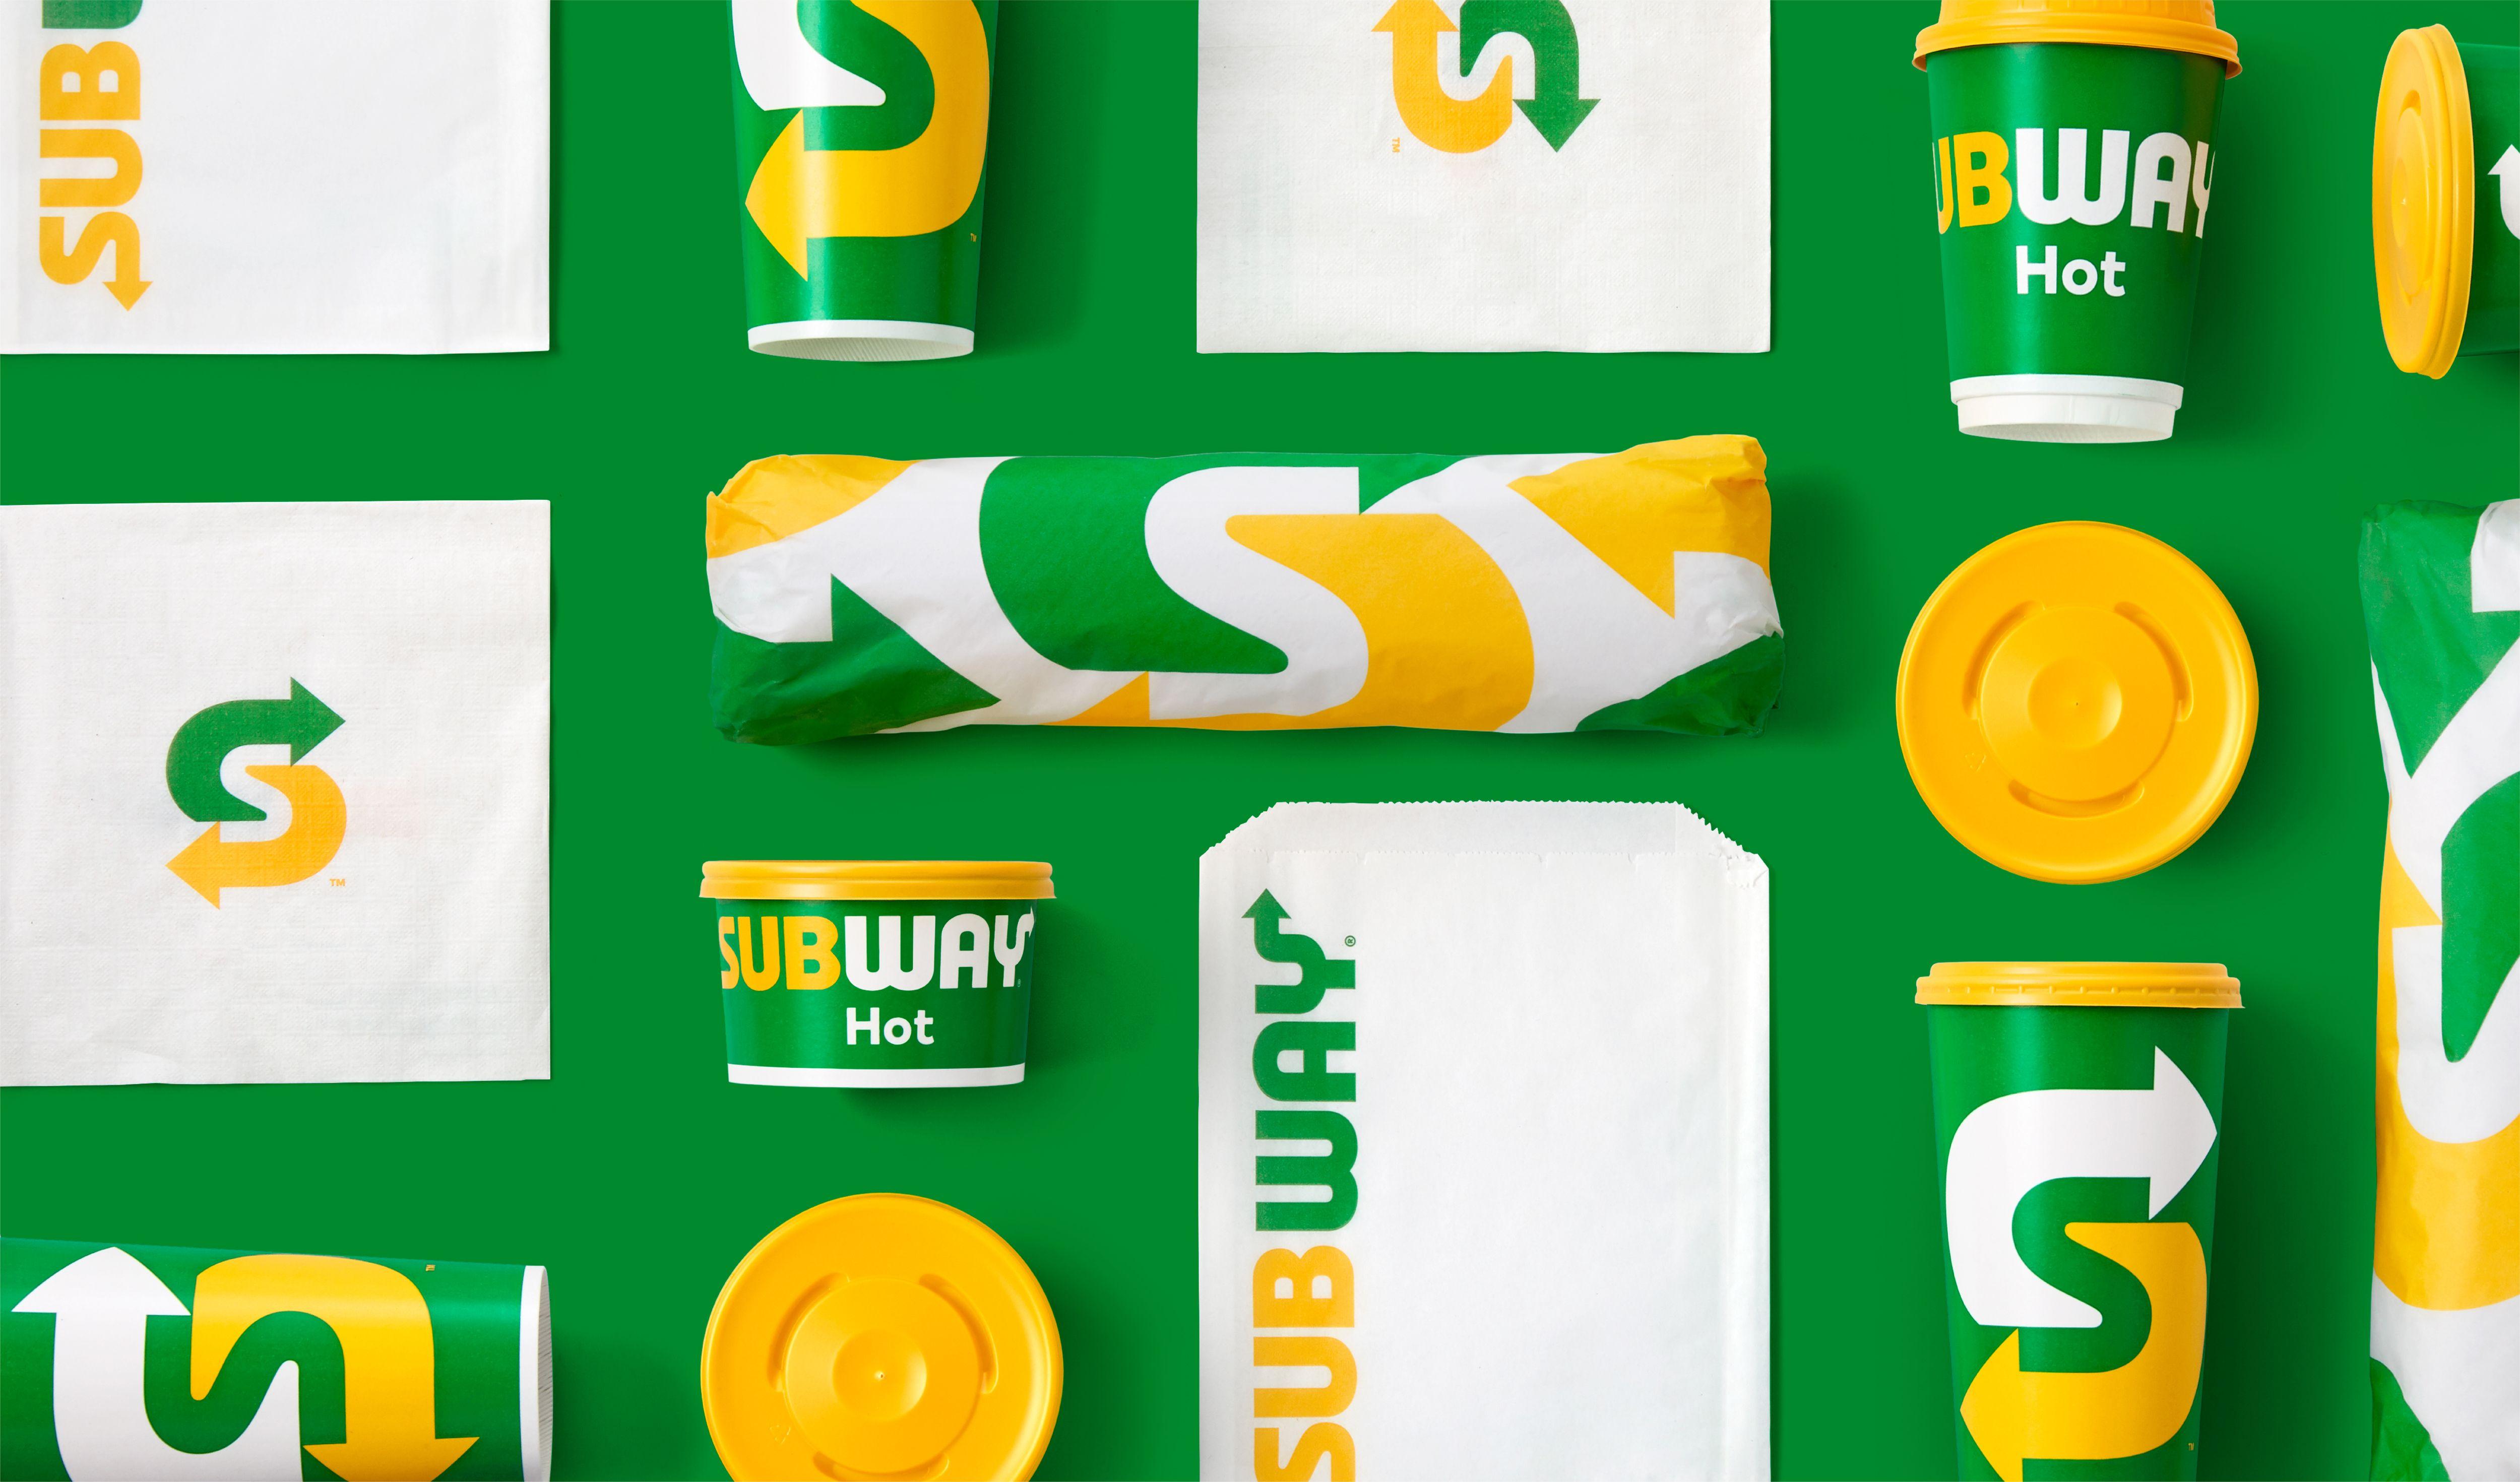 Subway 2018 Logo - The FAB Awards. Subway Visual Identity